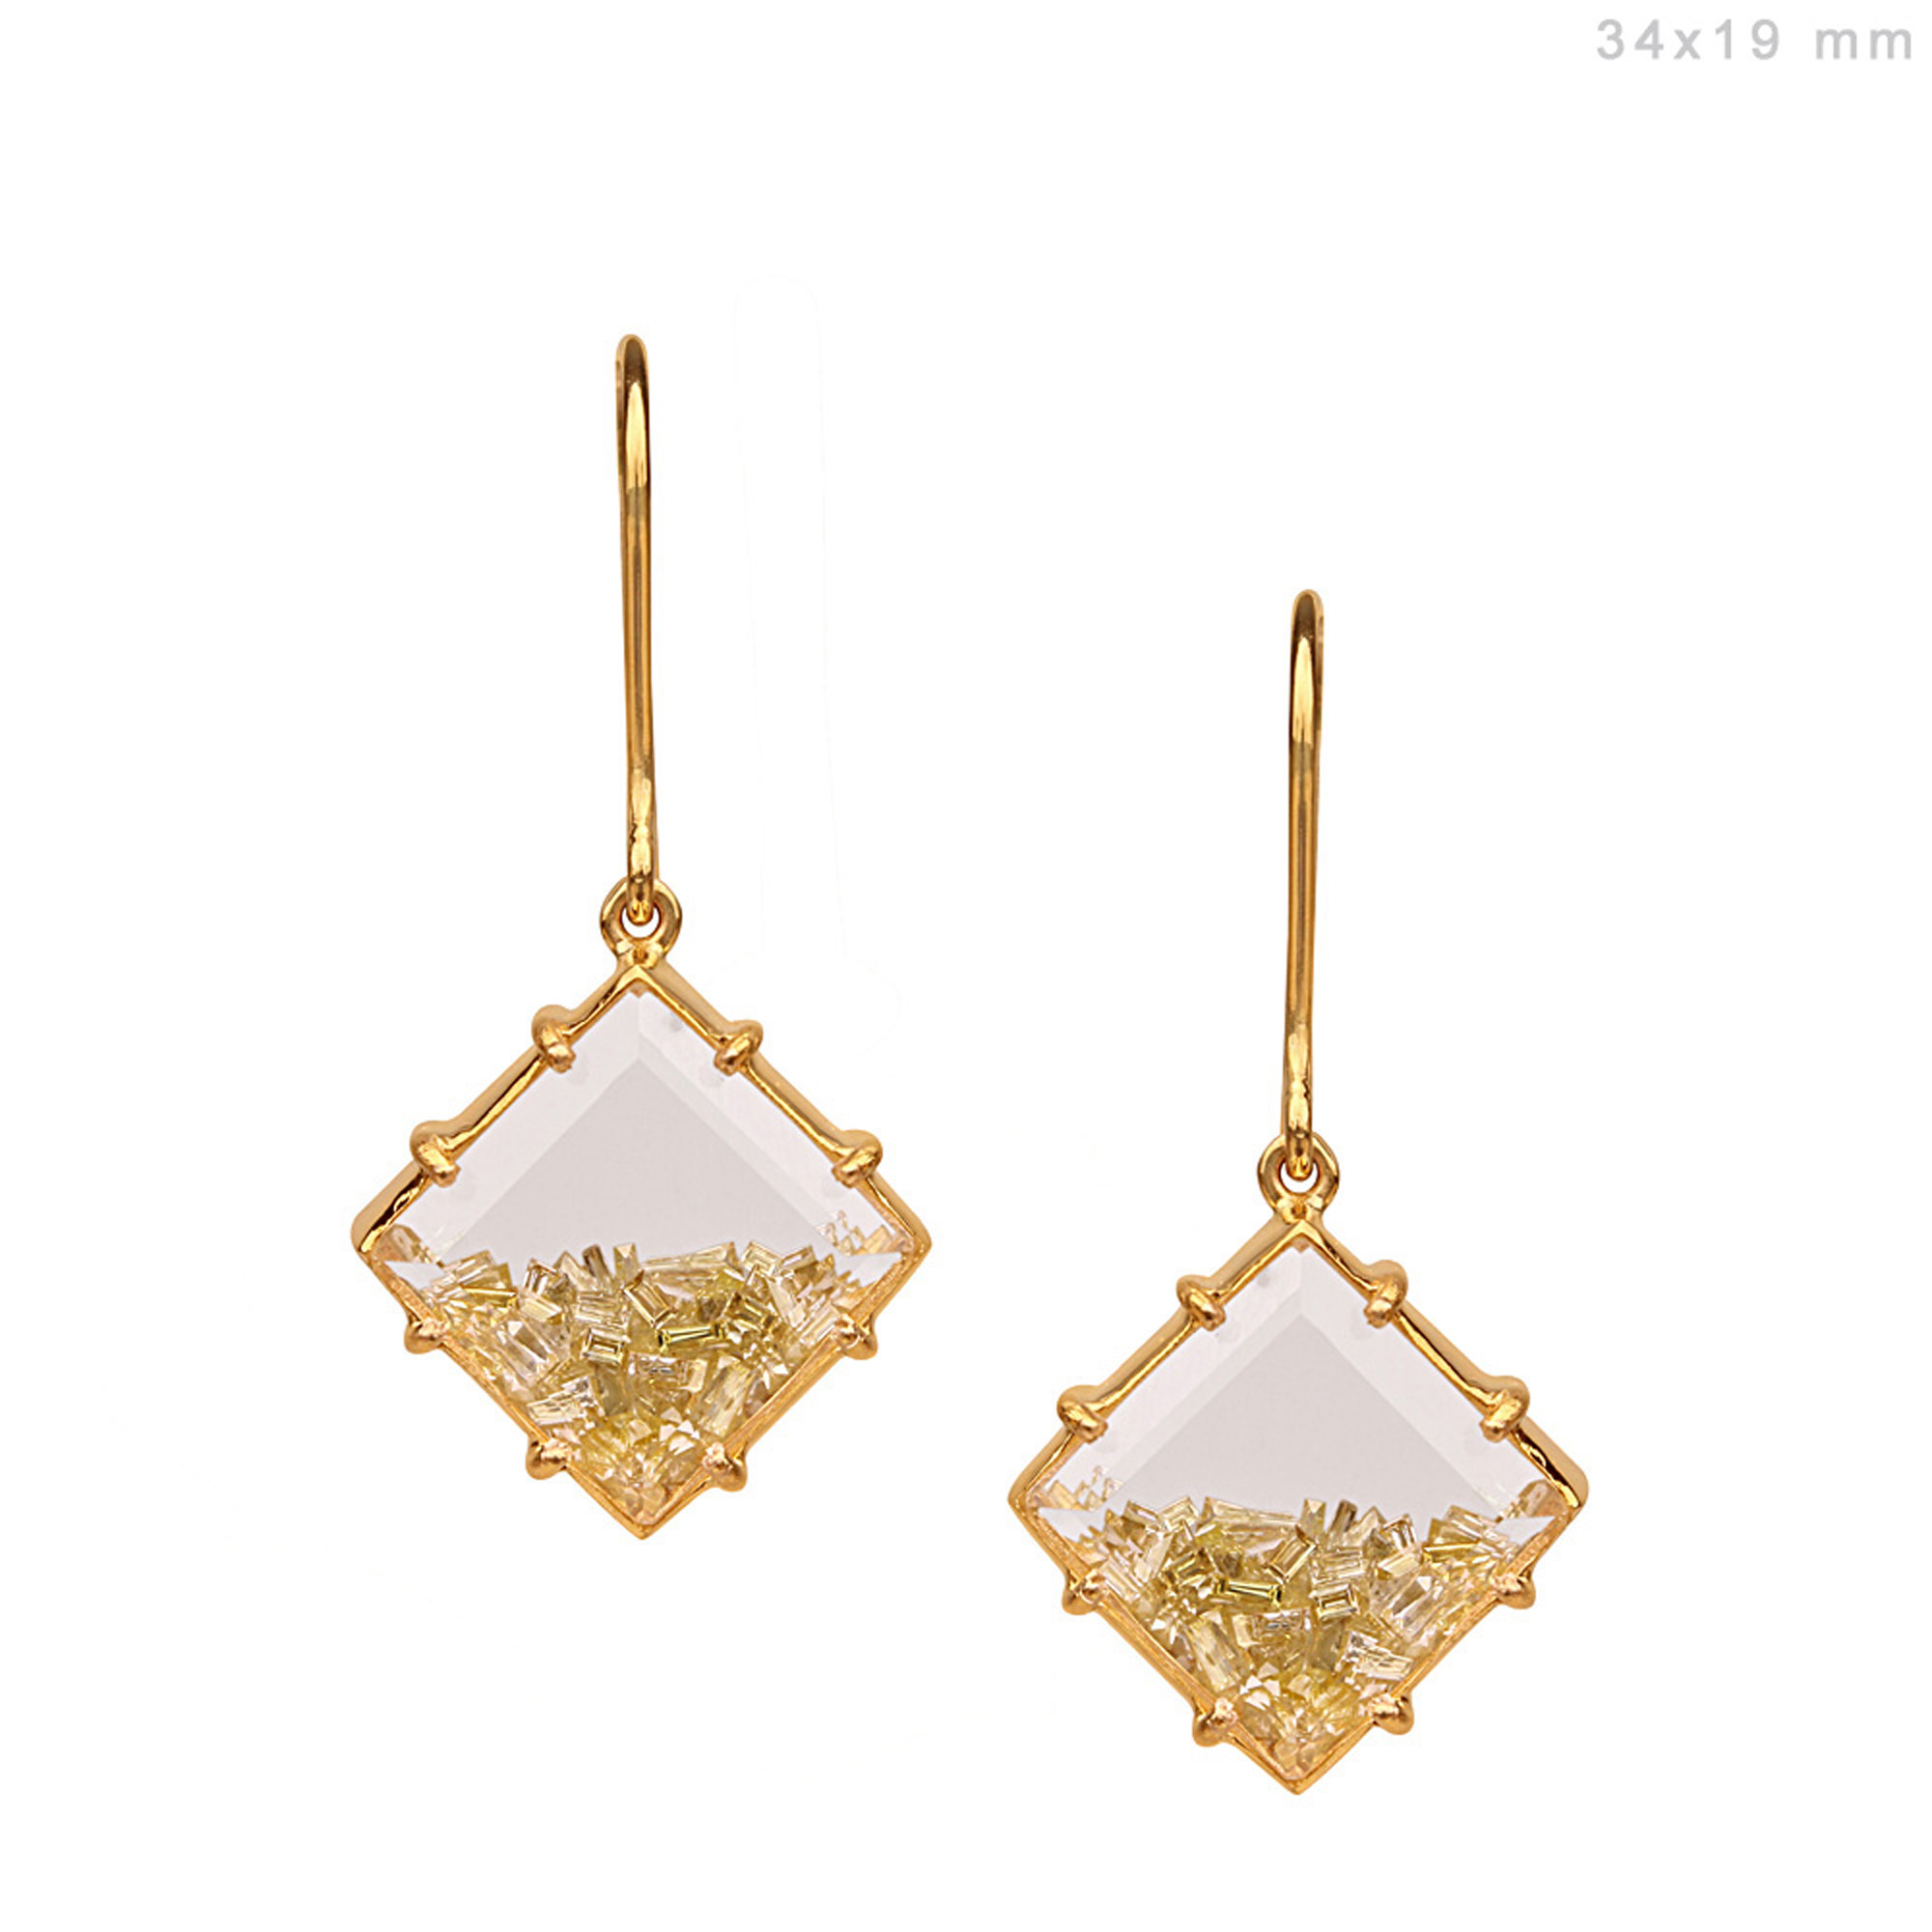 Natural diamond crystal shaker hook earrings made in 18k gold fine jewelry